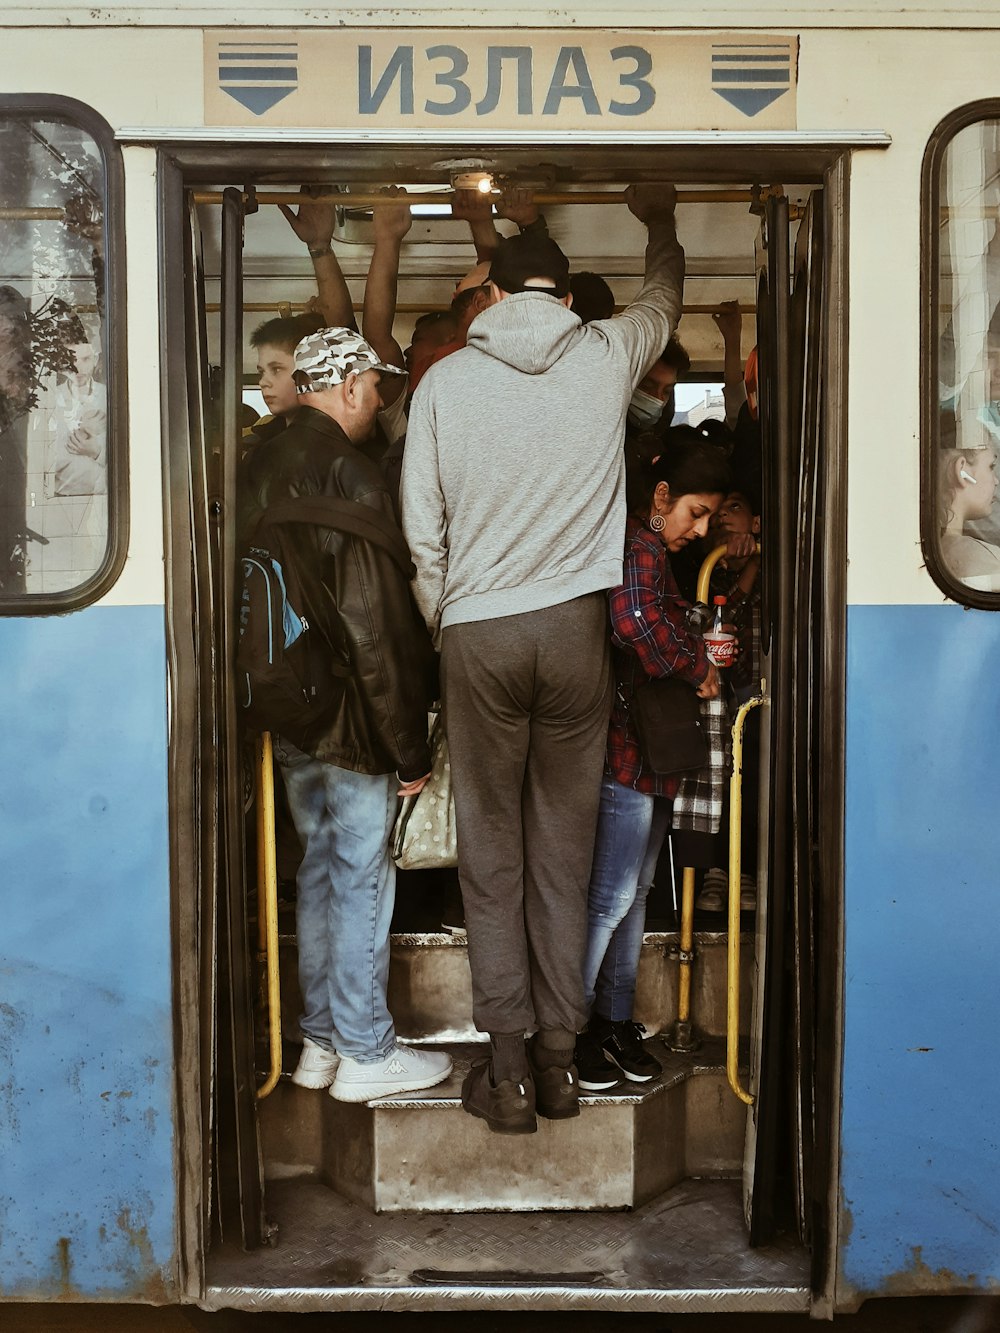 Un grupo de personas paradas en un tren